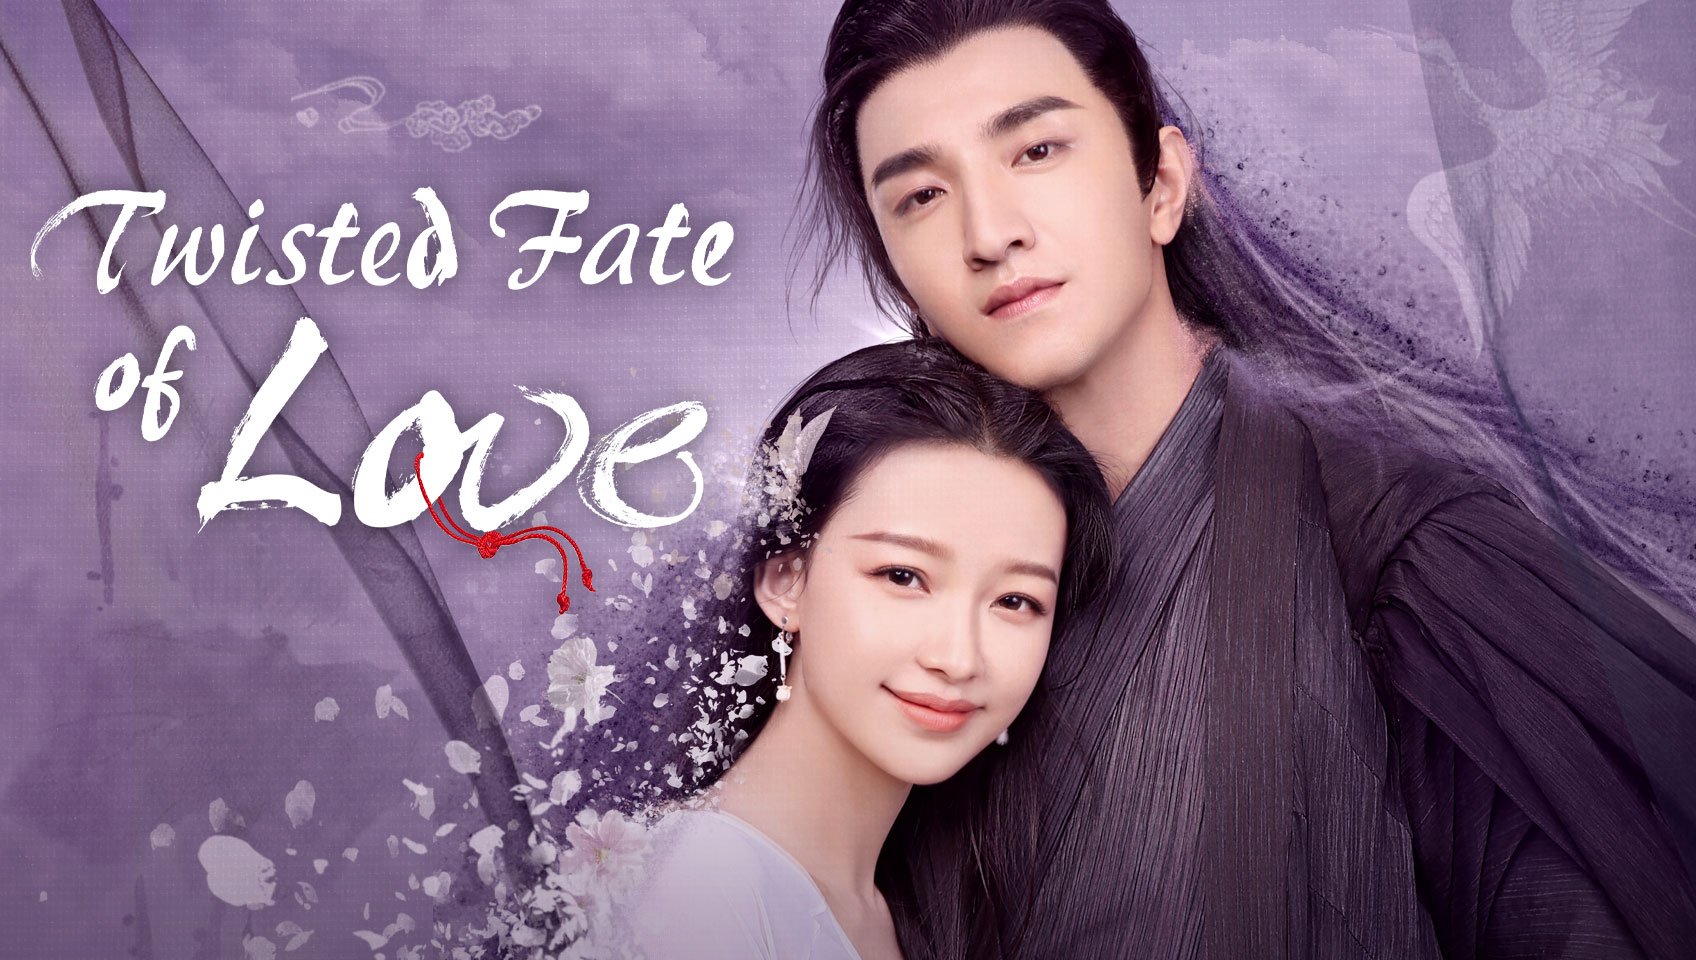 Kim Tịch Hà Tịch - Twisted Fate of Love  (2020)